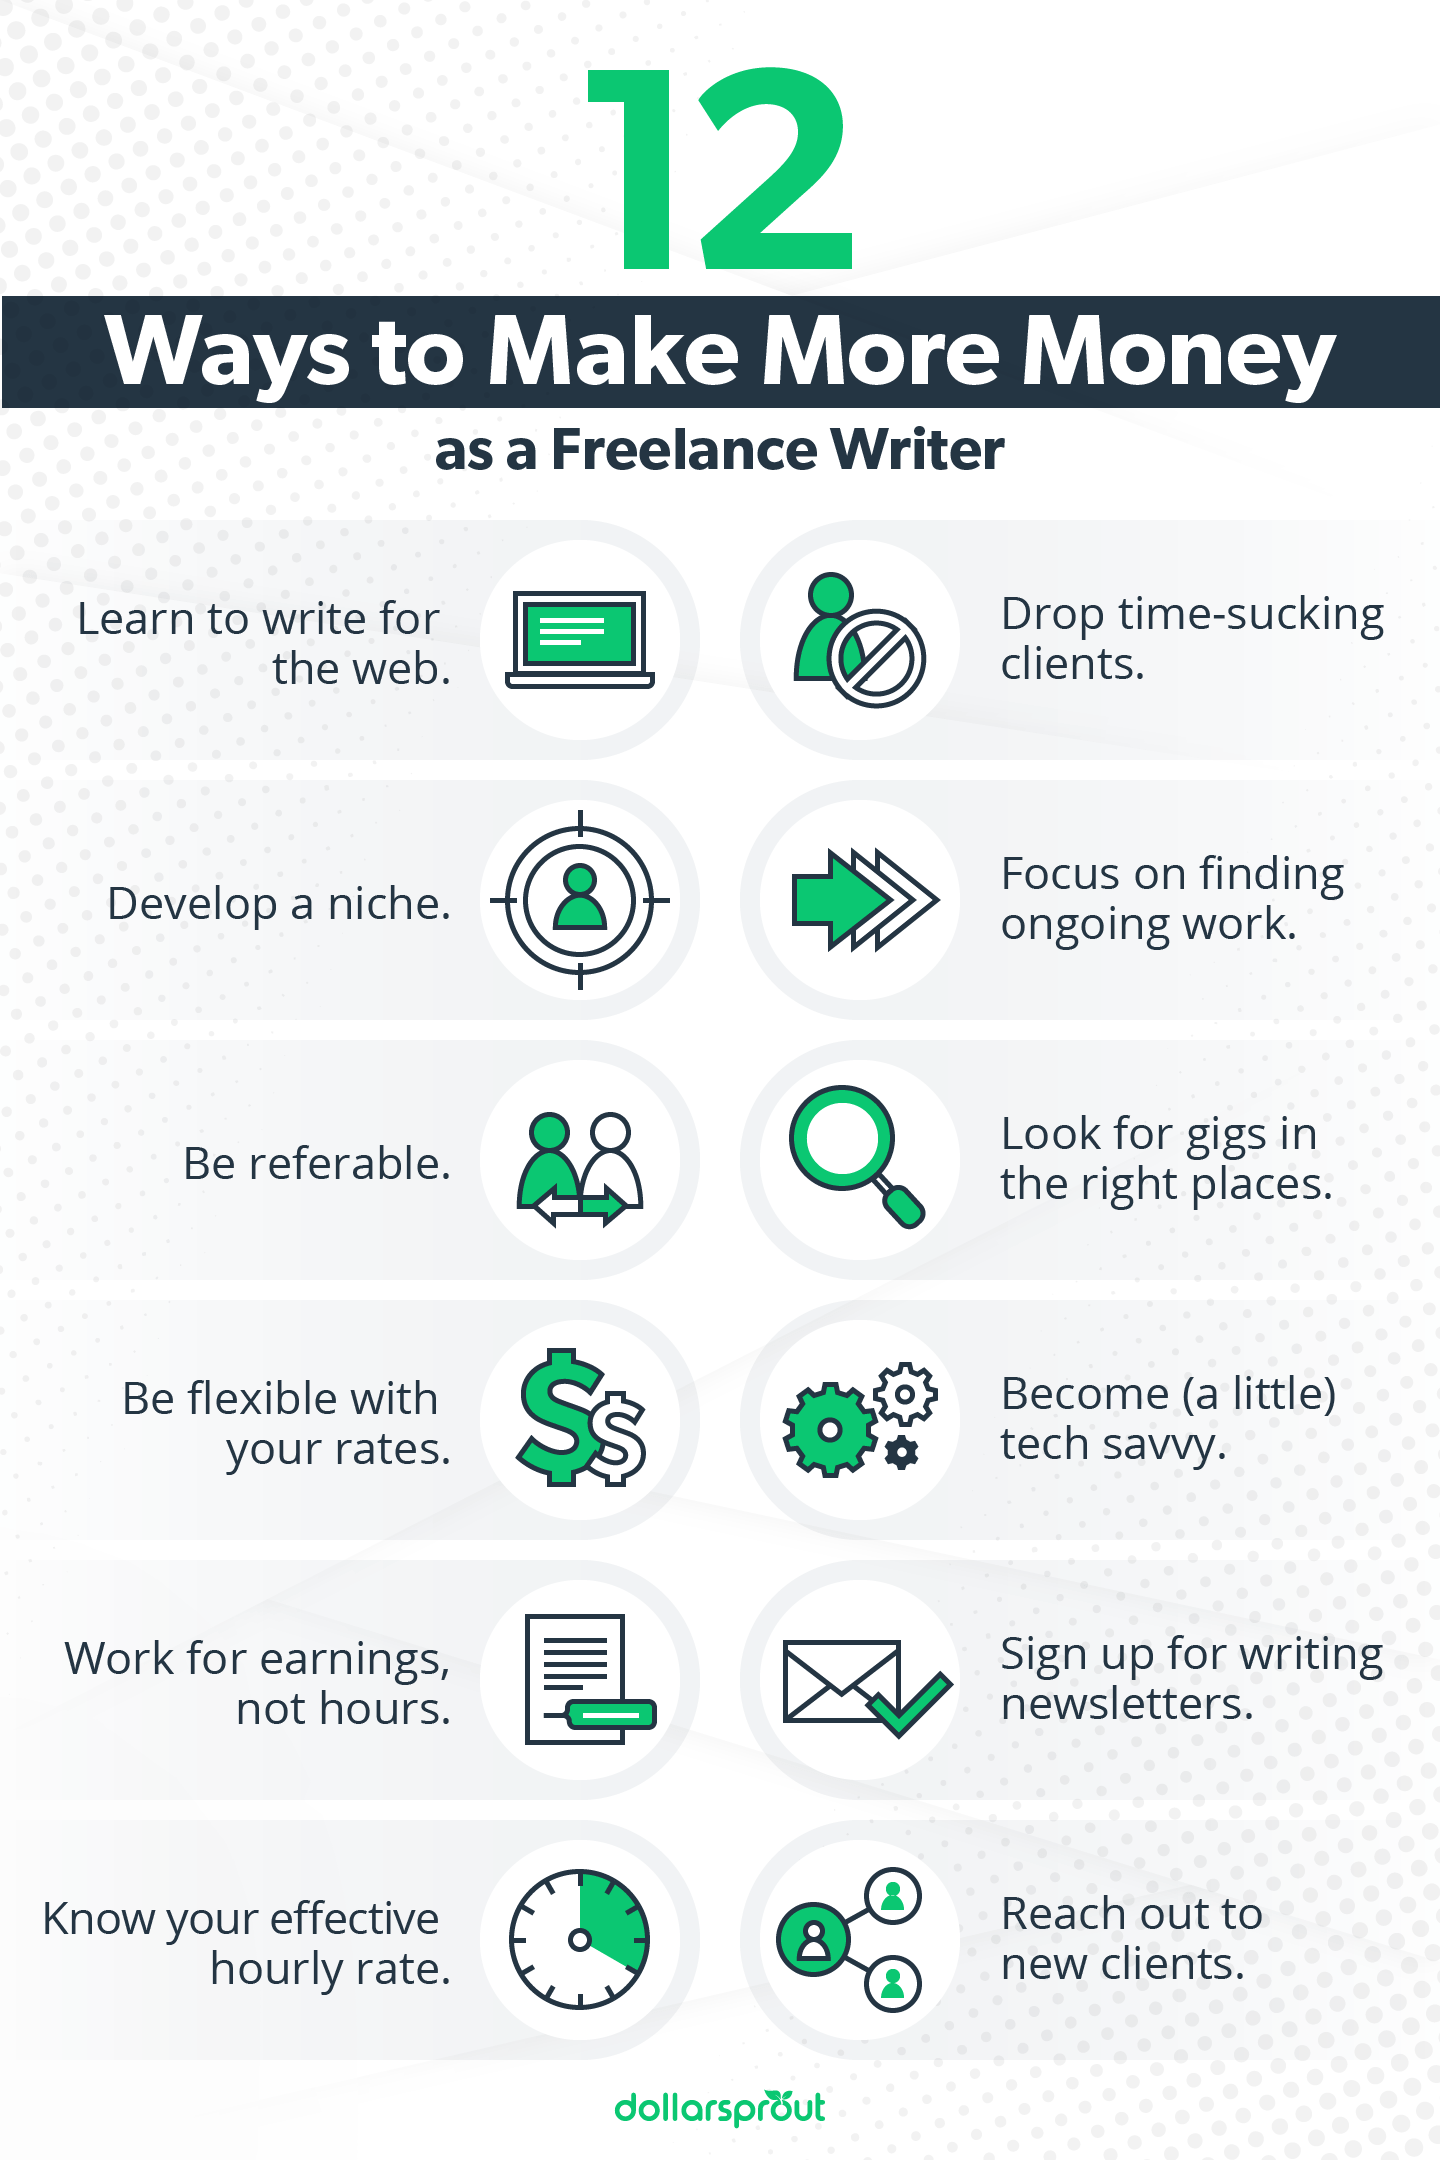 12 Ways to Make More Money as a Freelance Writer